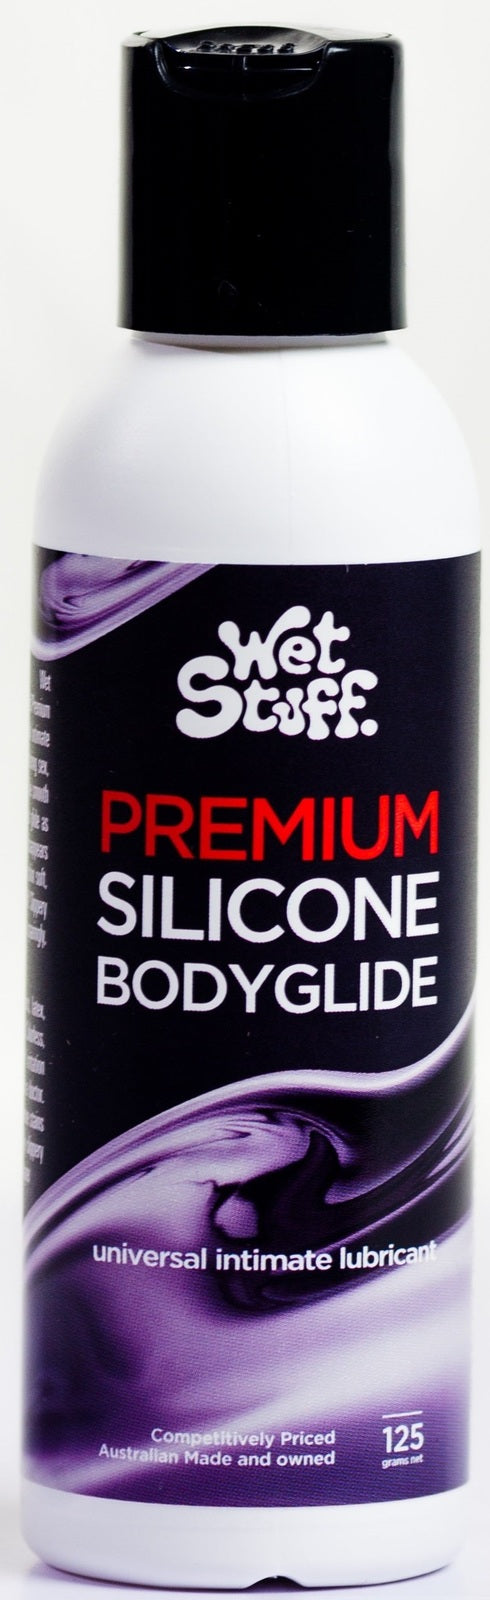 Wet Stuff: Premium Silicone Bodyglide Lubricant (125g)